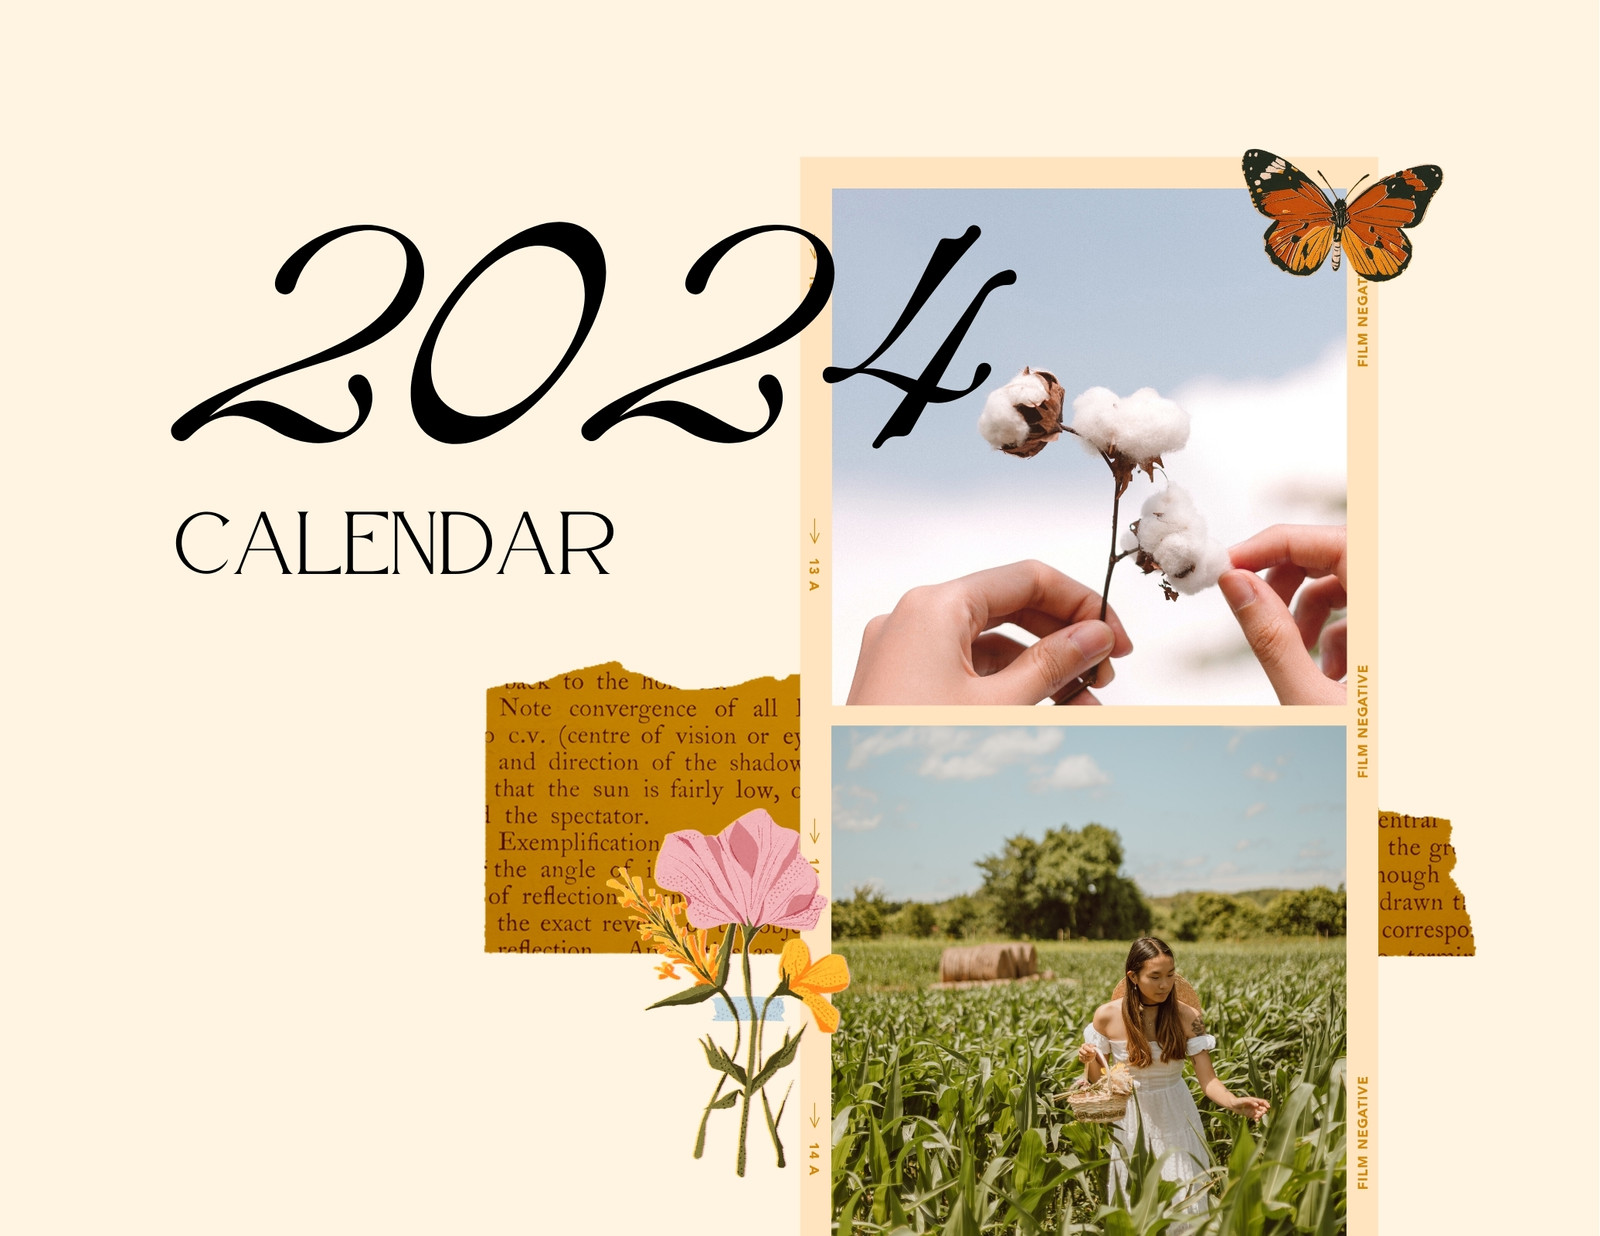 2024 Yearly Calendar Calendar Cards Scrapbook Calendar -   Scrapbook  calendar, Minimalist wall art printable, Kids printable art